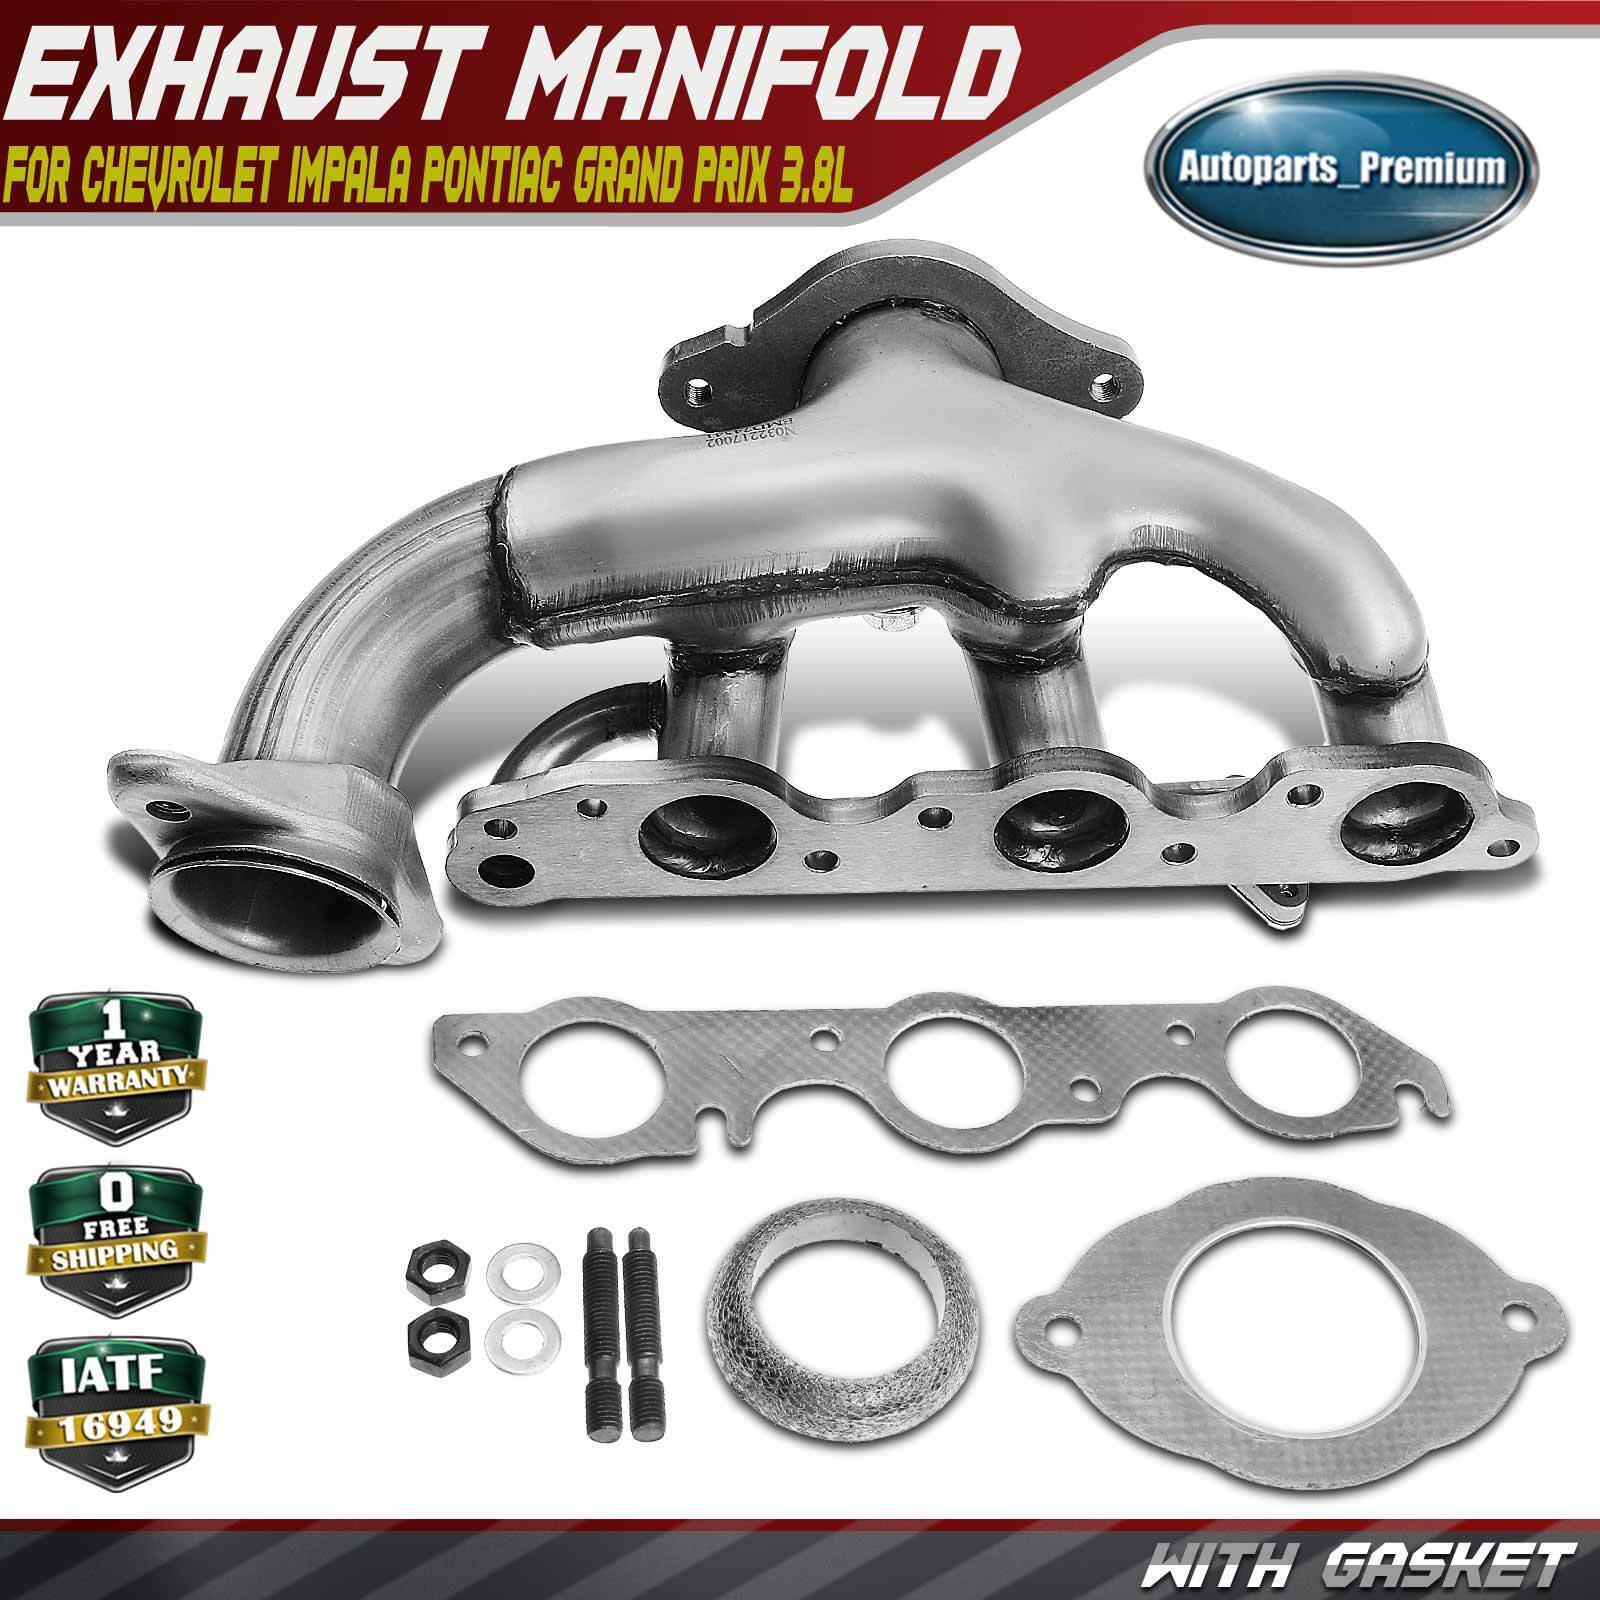 Rear Exhaust Manifold w/ Gasket Kit for Chevrolet Impala Pontiac Grand Prix 3.8L